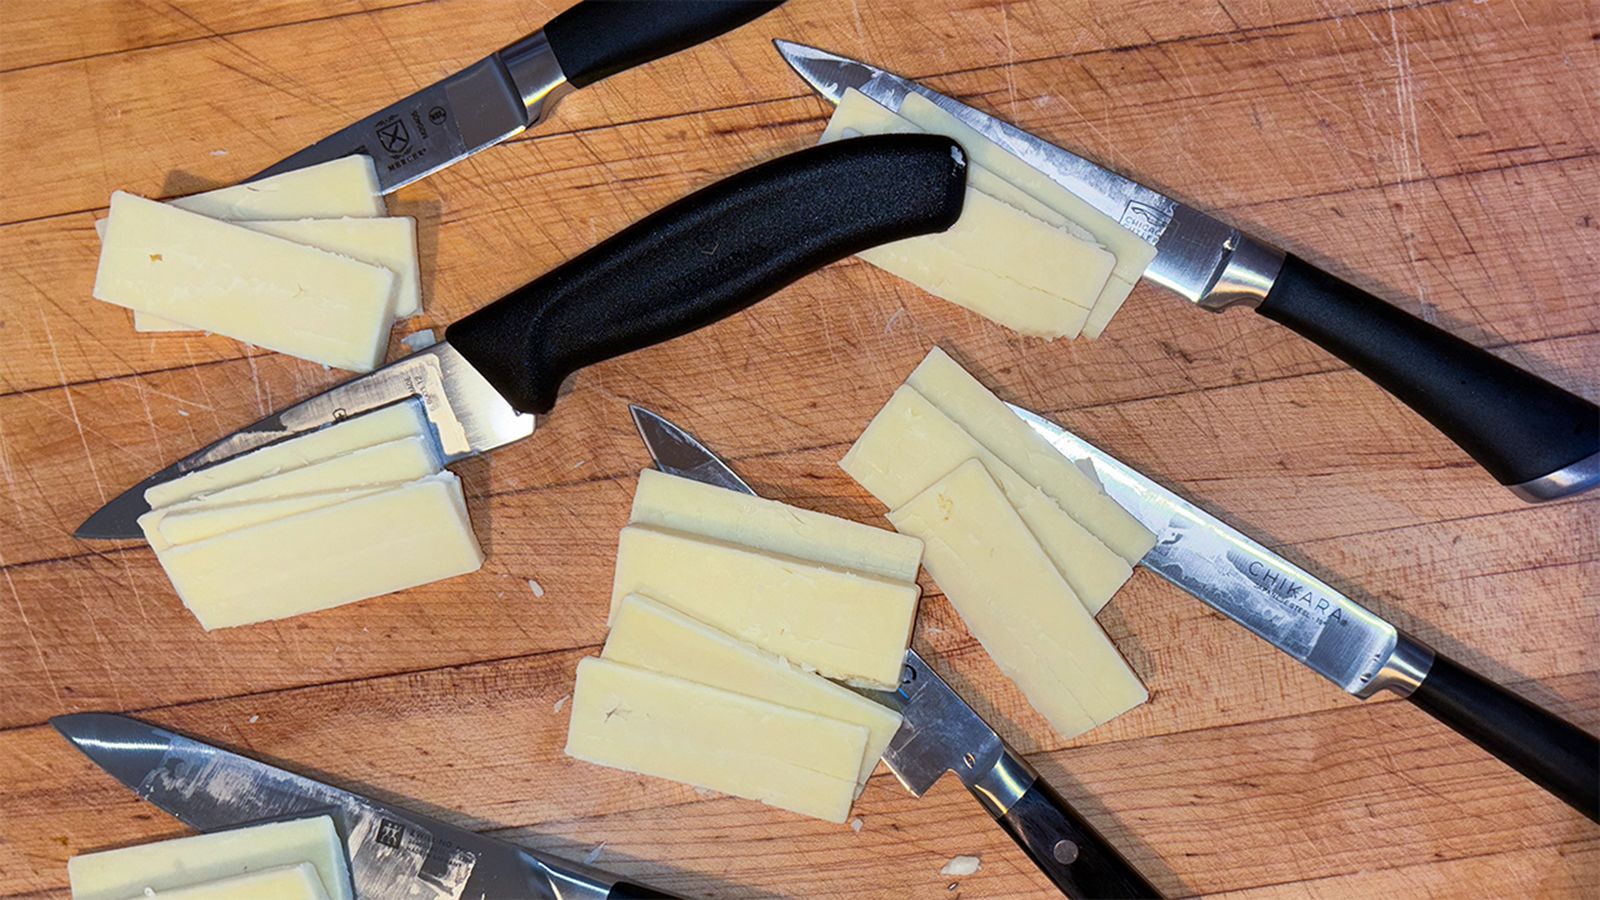 https://media.cnn.com/api/v1/images/stellar/prod/how-to-pick-set-best-knife-set.jpg?c=original